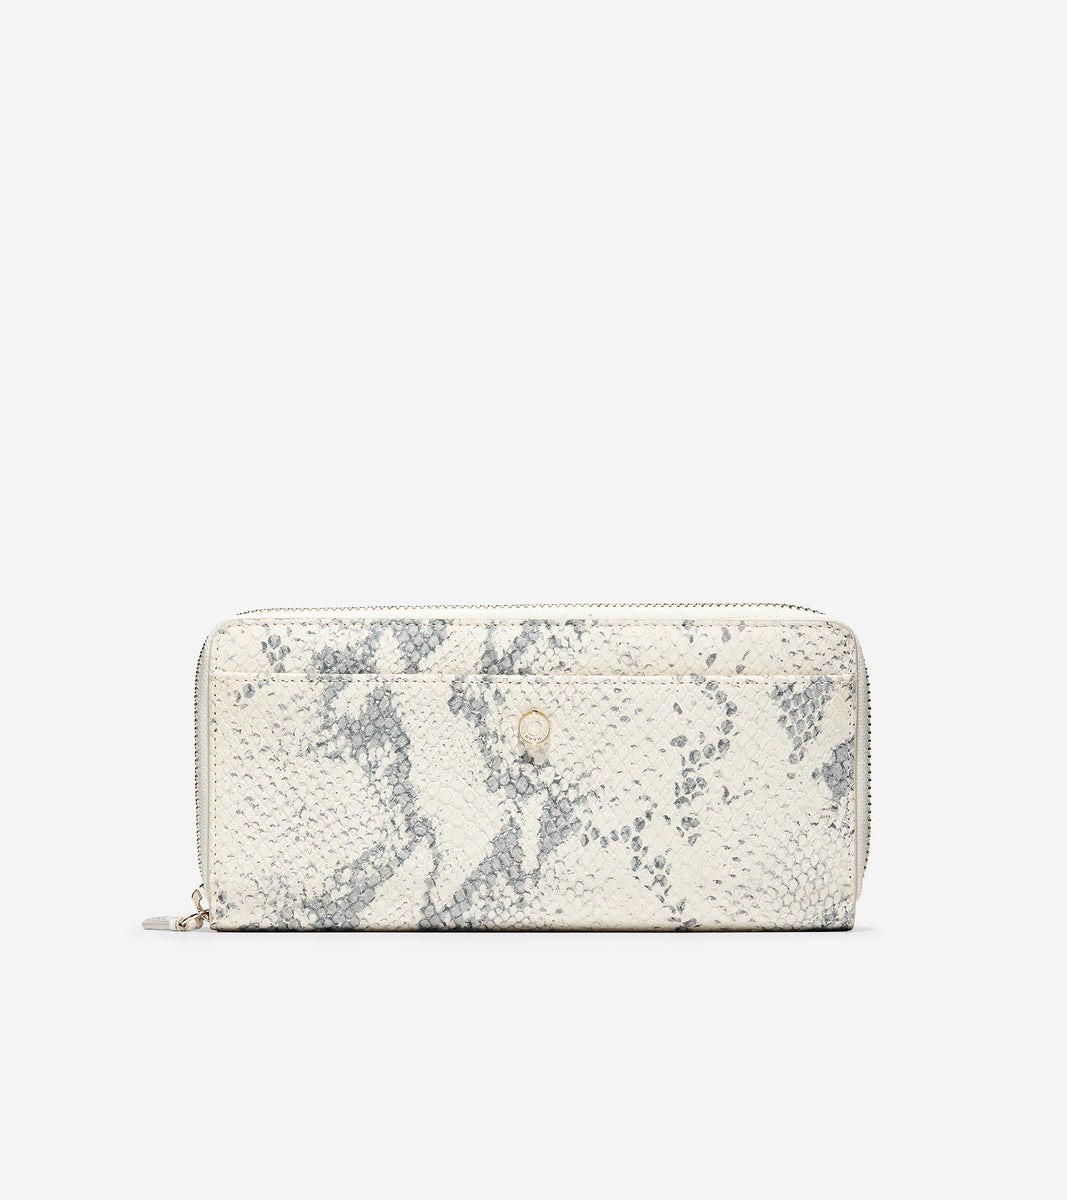 ColeHaan-GRANDSERIES Continental Wallet-u04491-Ivory Roccia Leather